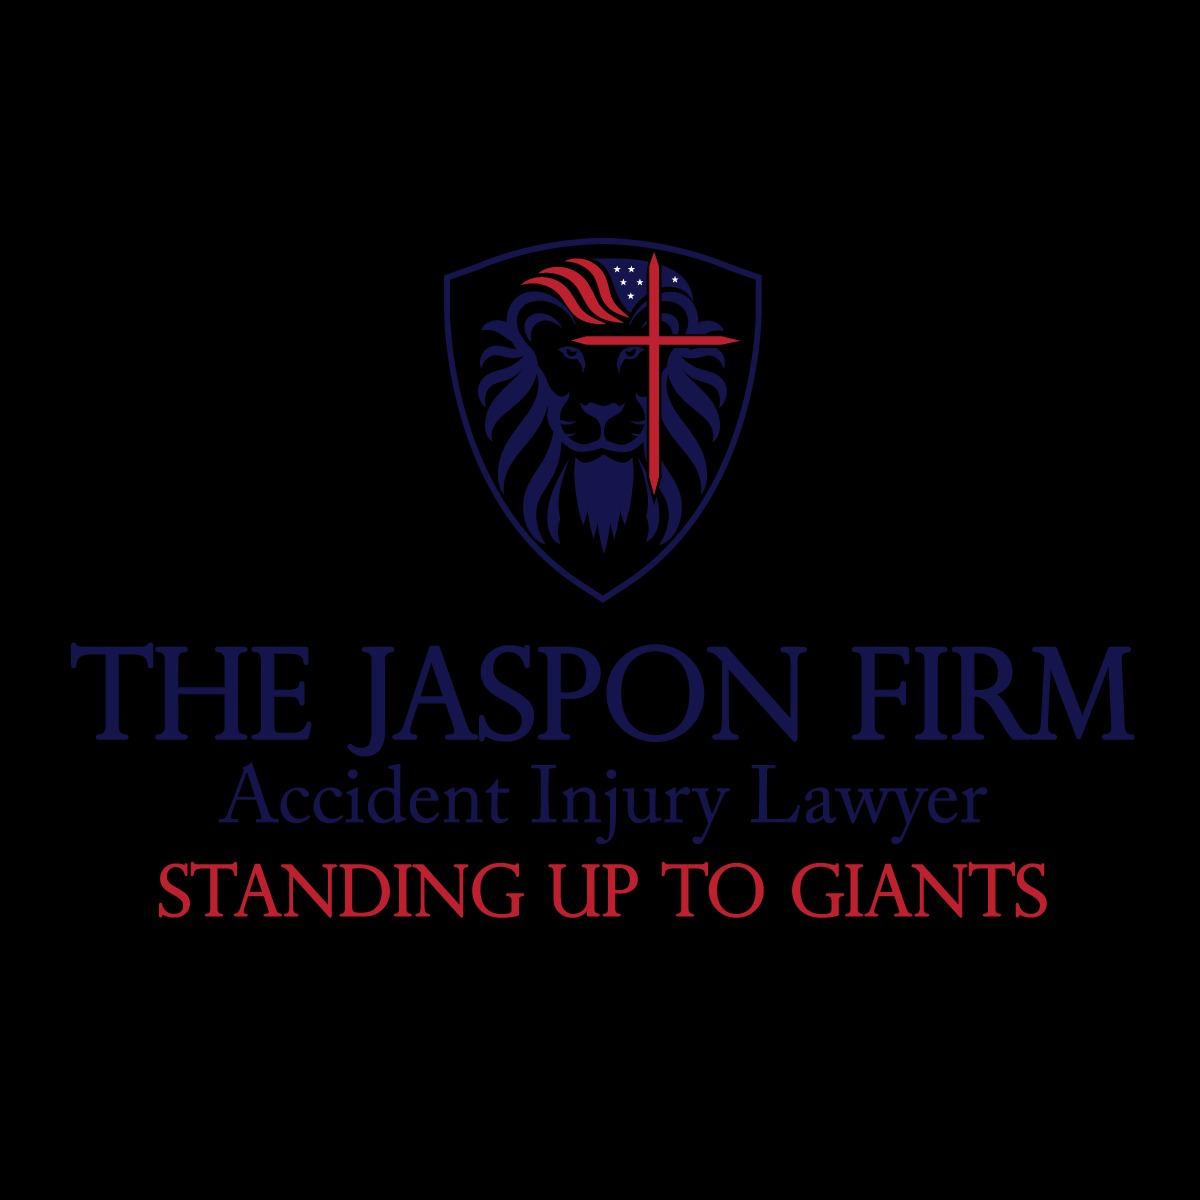 The Jaspon Firm Accident Injury Lawyer - Orlando, FL 32804 - (407)513-9515 | ShowMeLocal.com